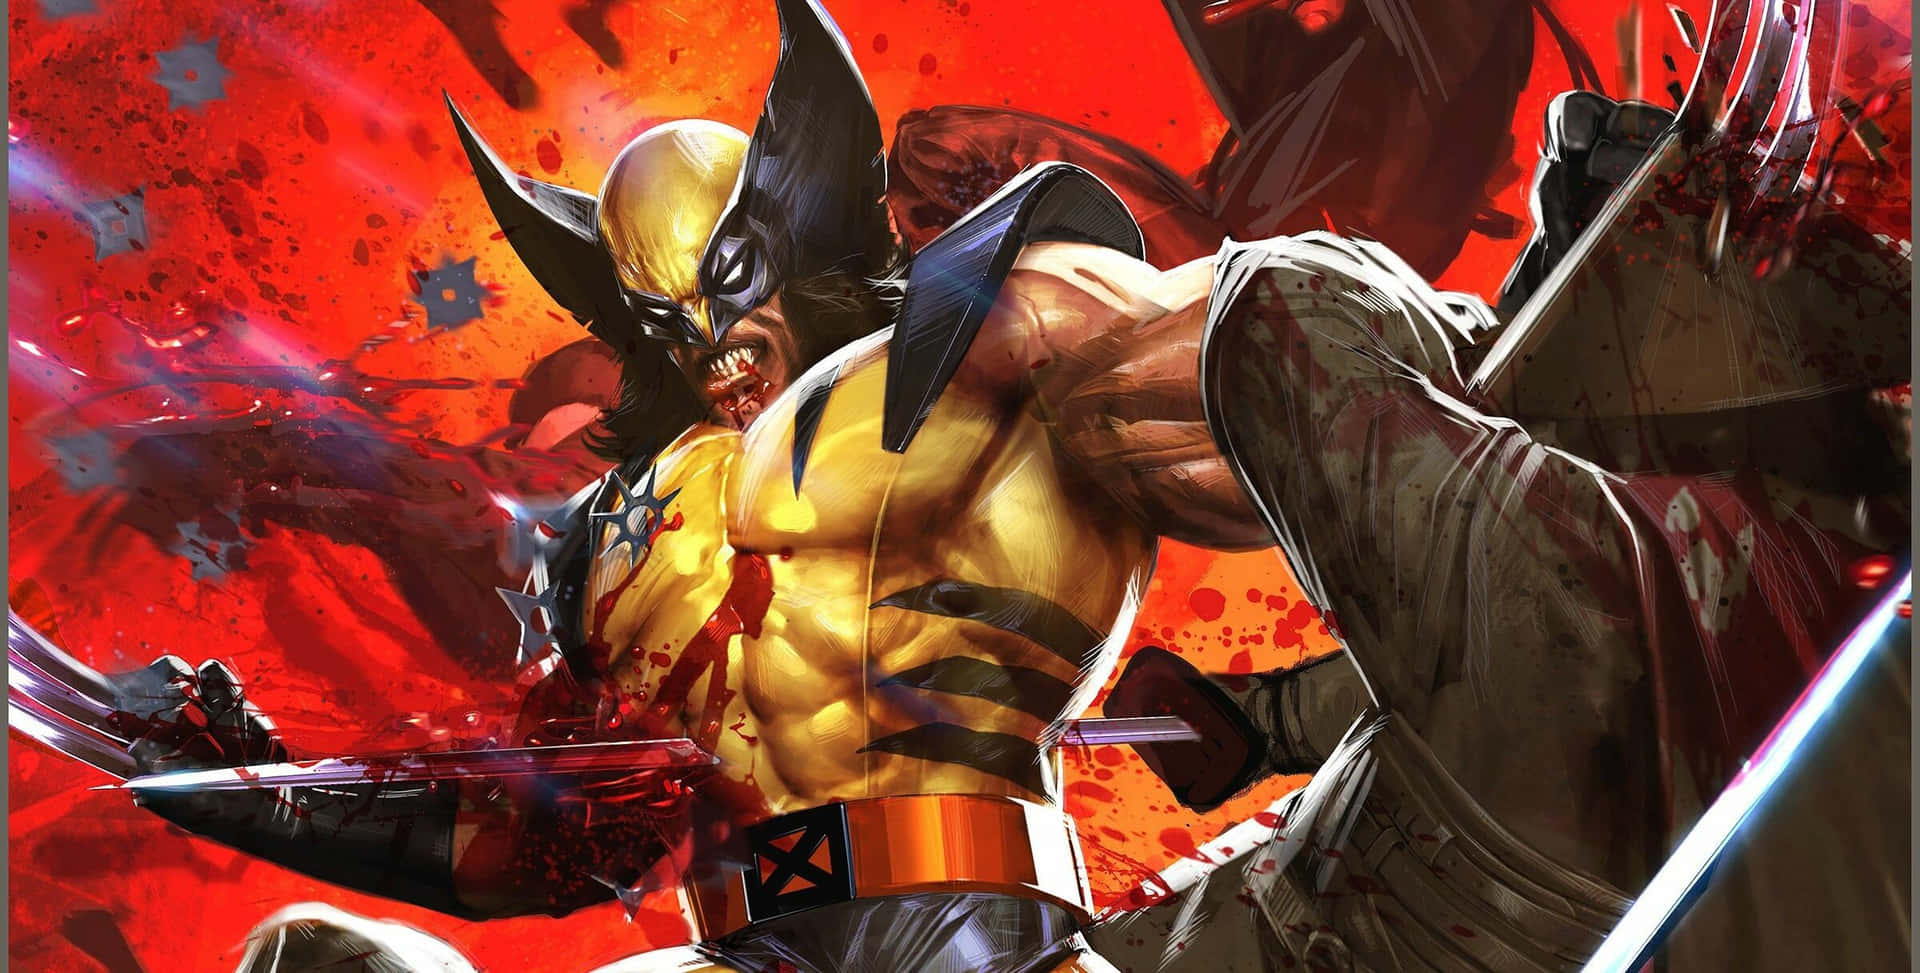 "Wolverine Snatched His Prey"